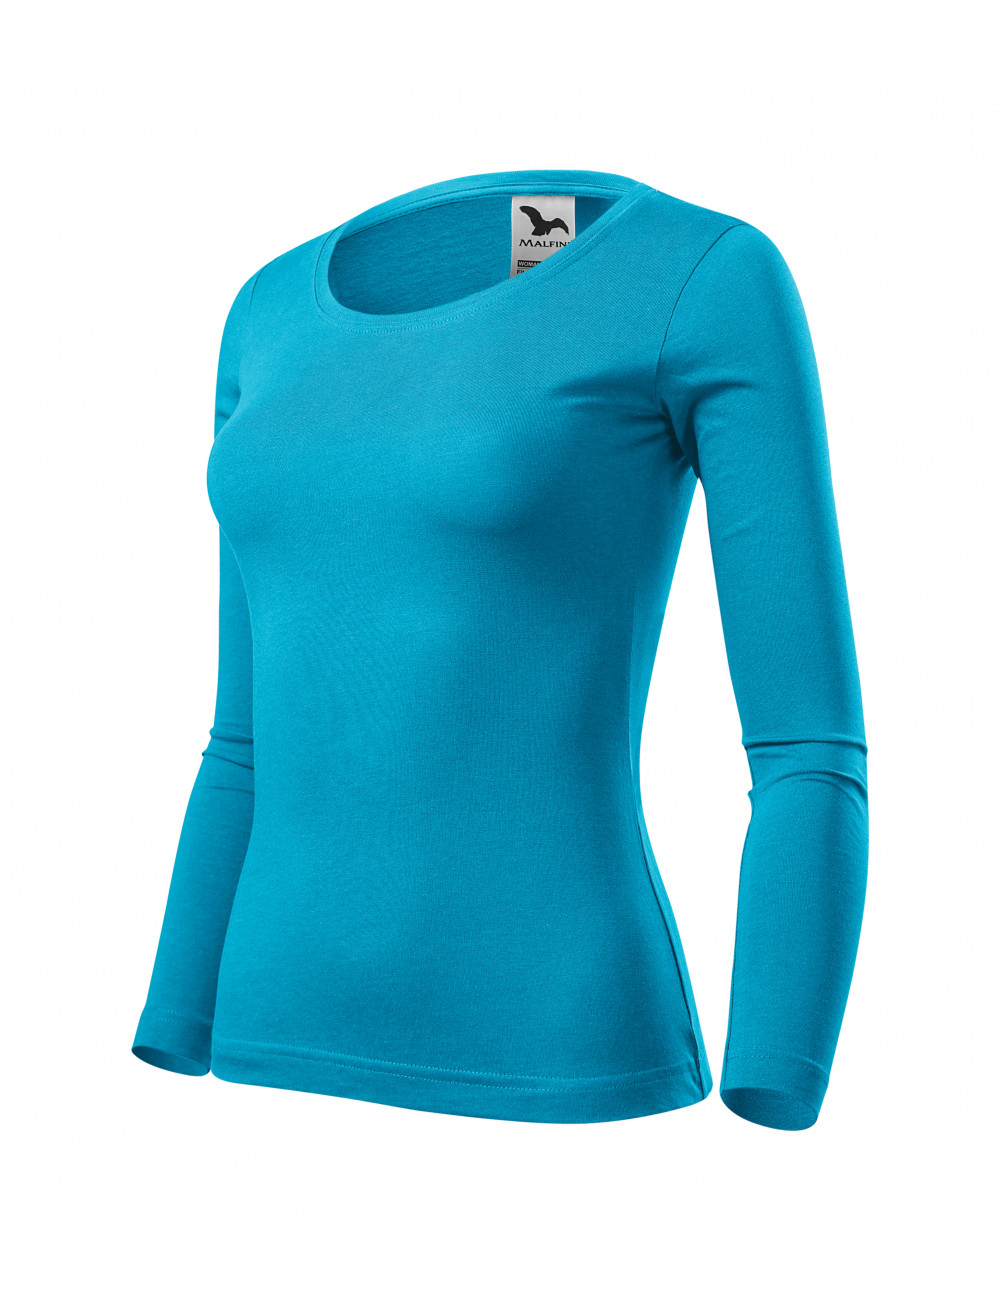 Women`s t-shirt fit-t ls 169 turquoise Adler Malfini